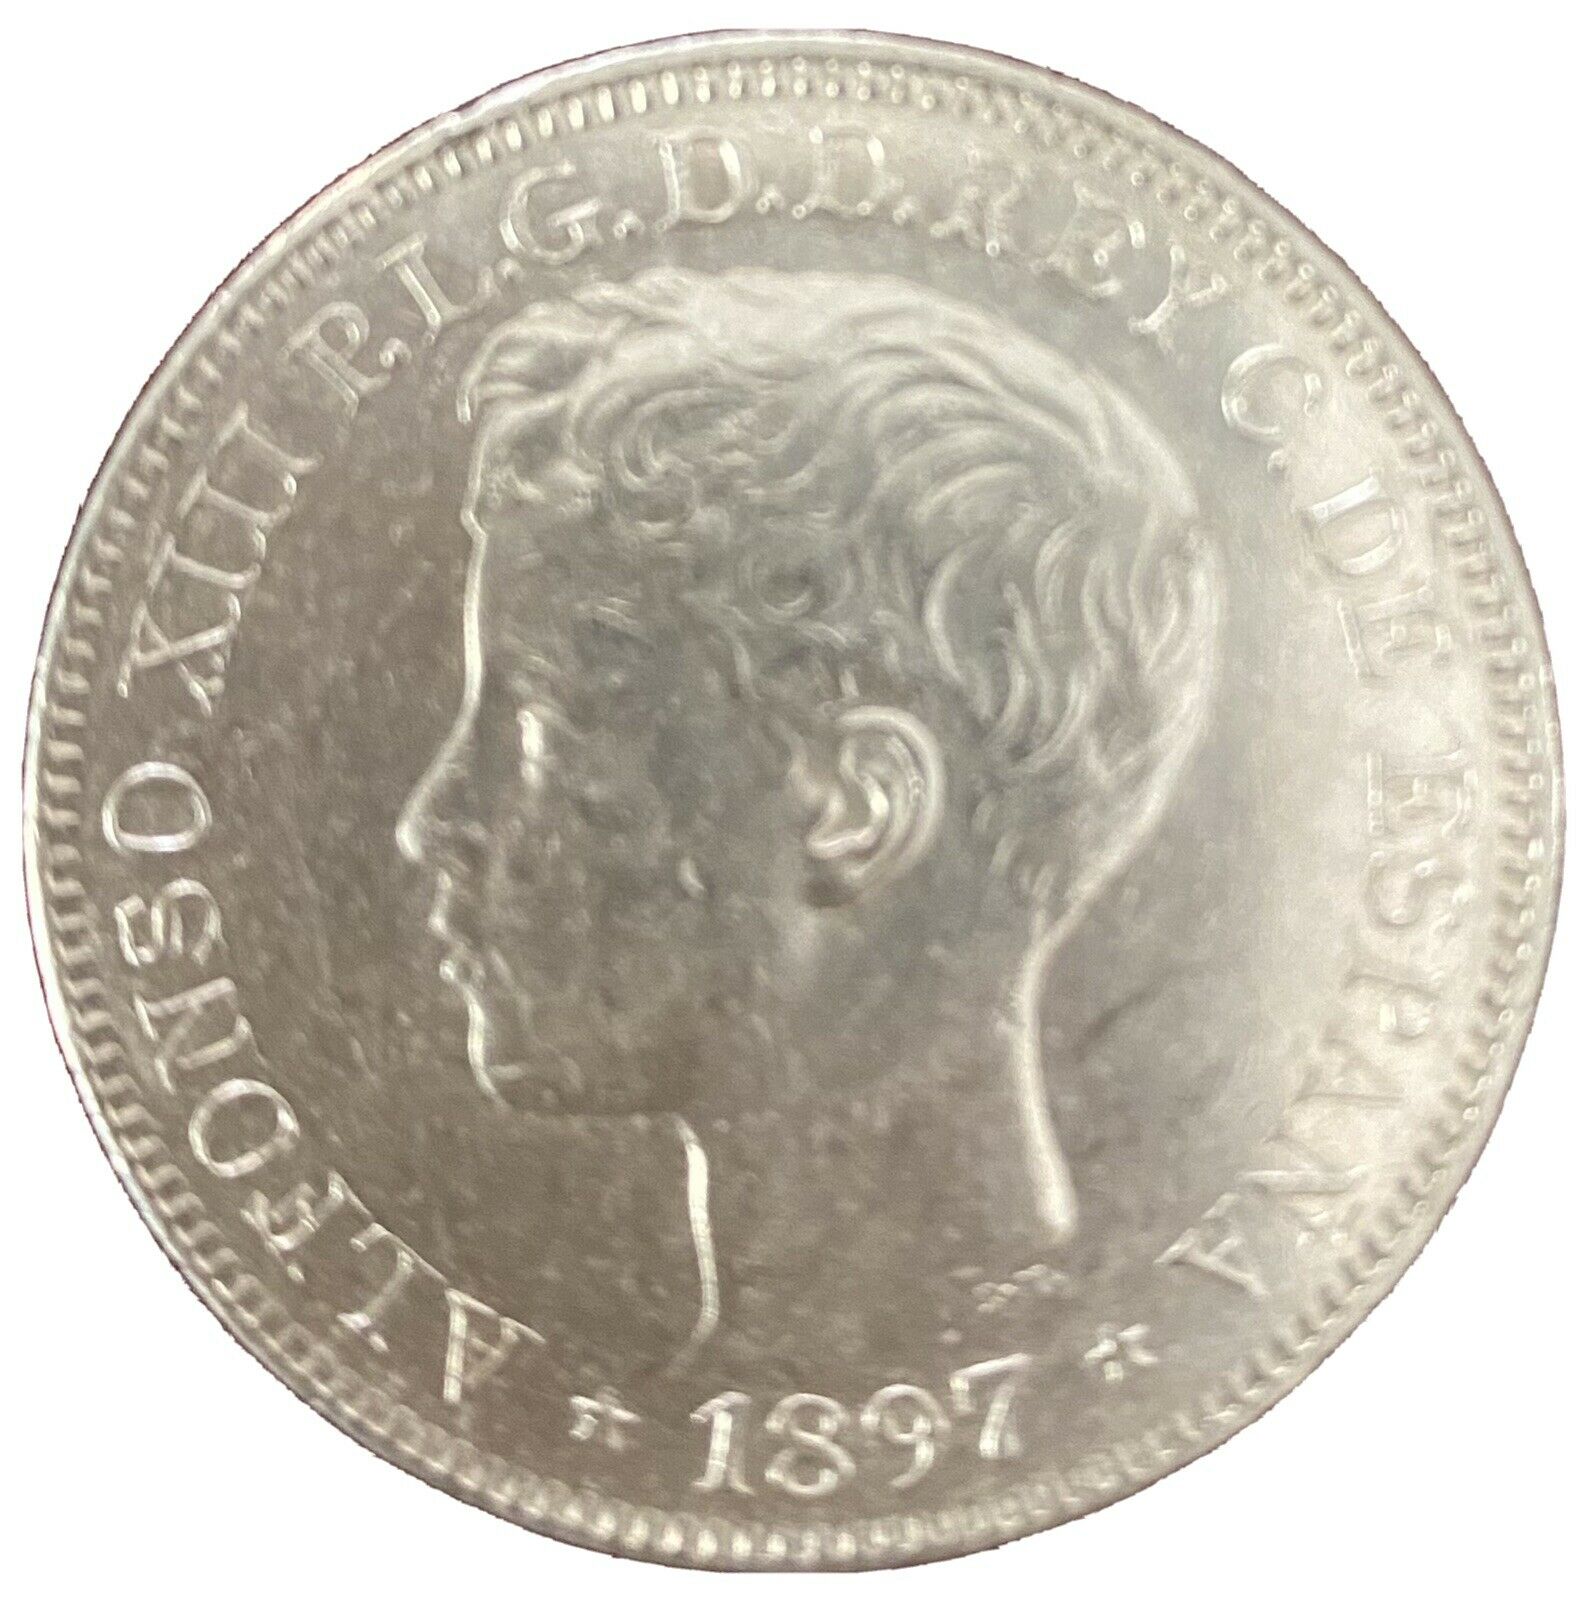 1897 Islas Filipinas Silver Un Peso Alphonso Xiii Coin - Xf - Au.